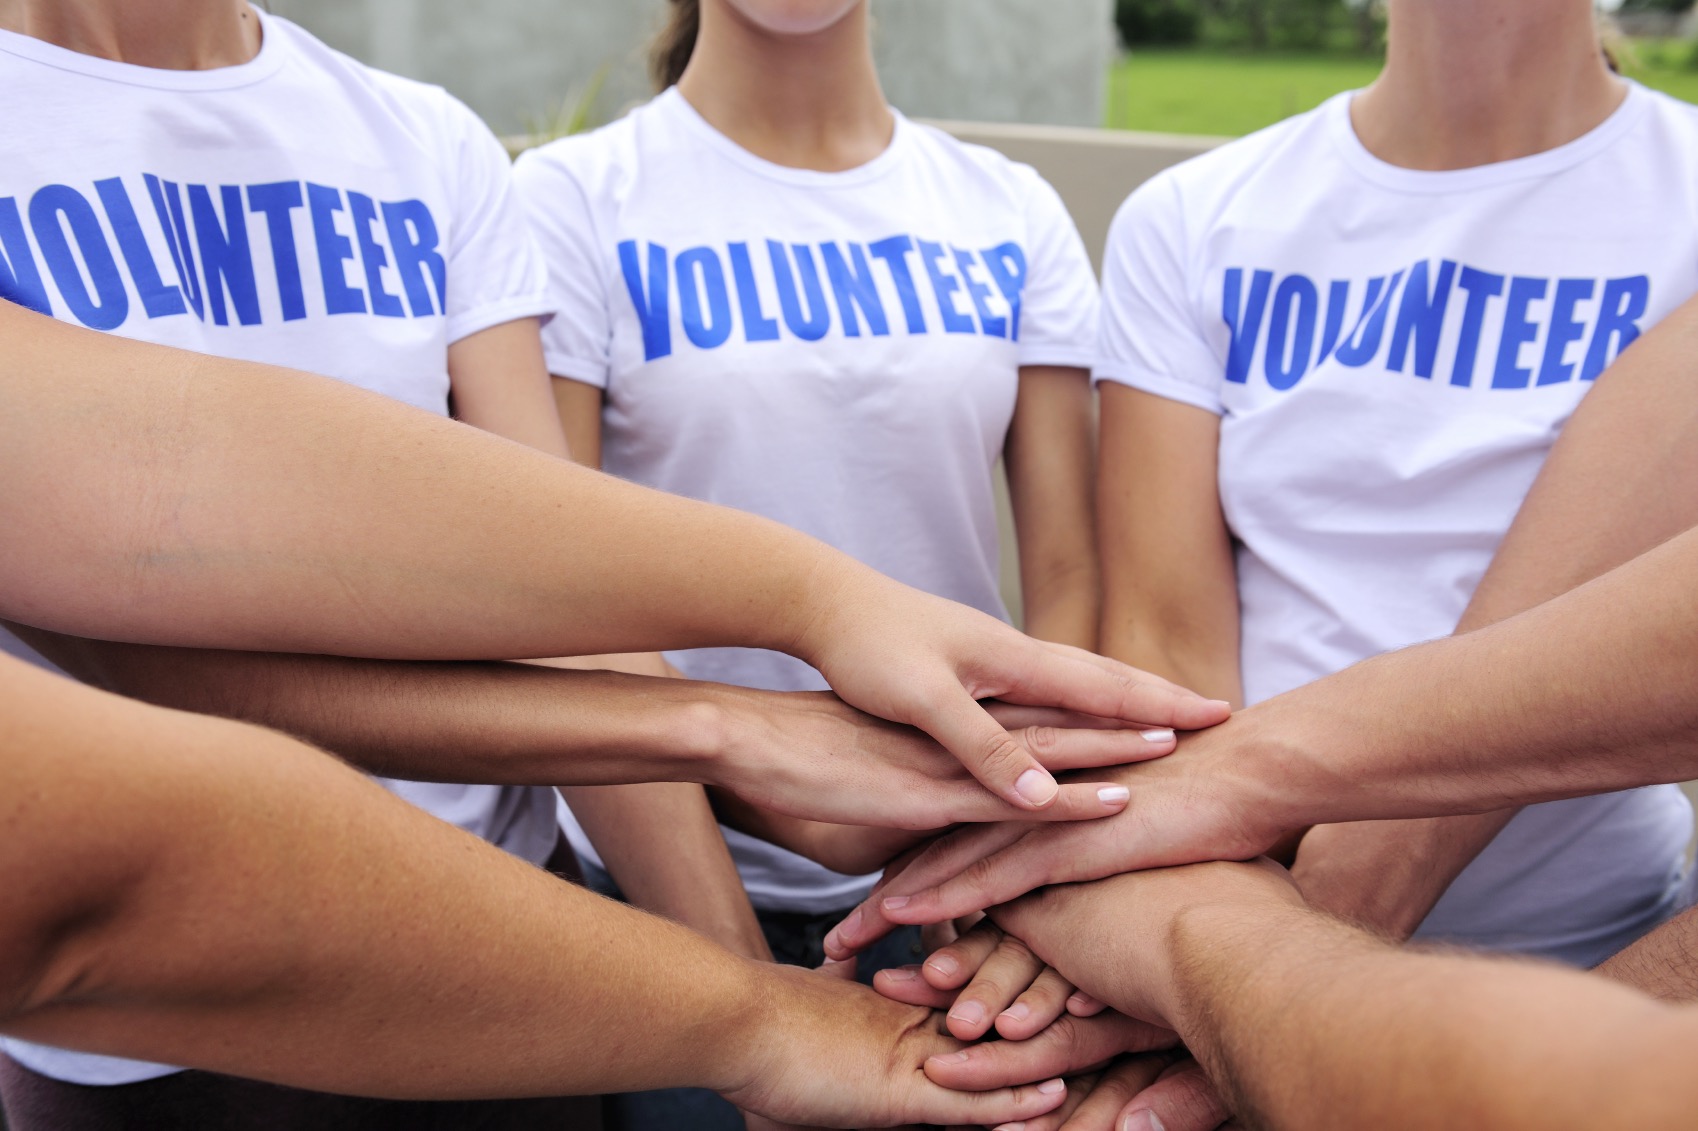 volunteer group hands together showing unity